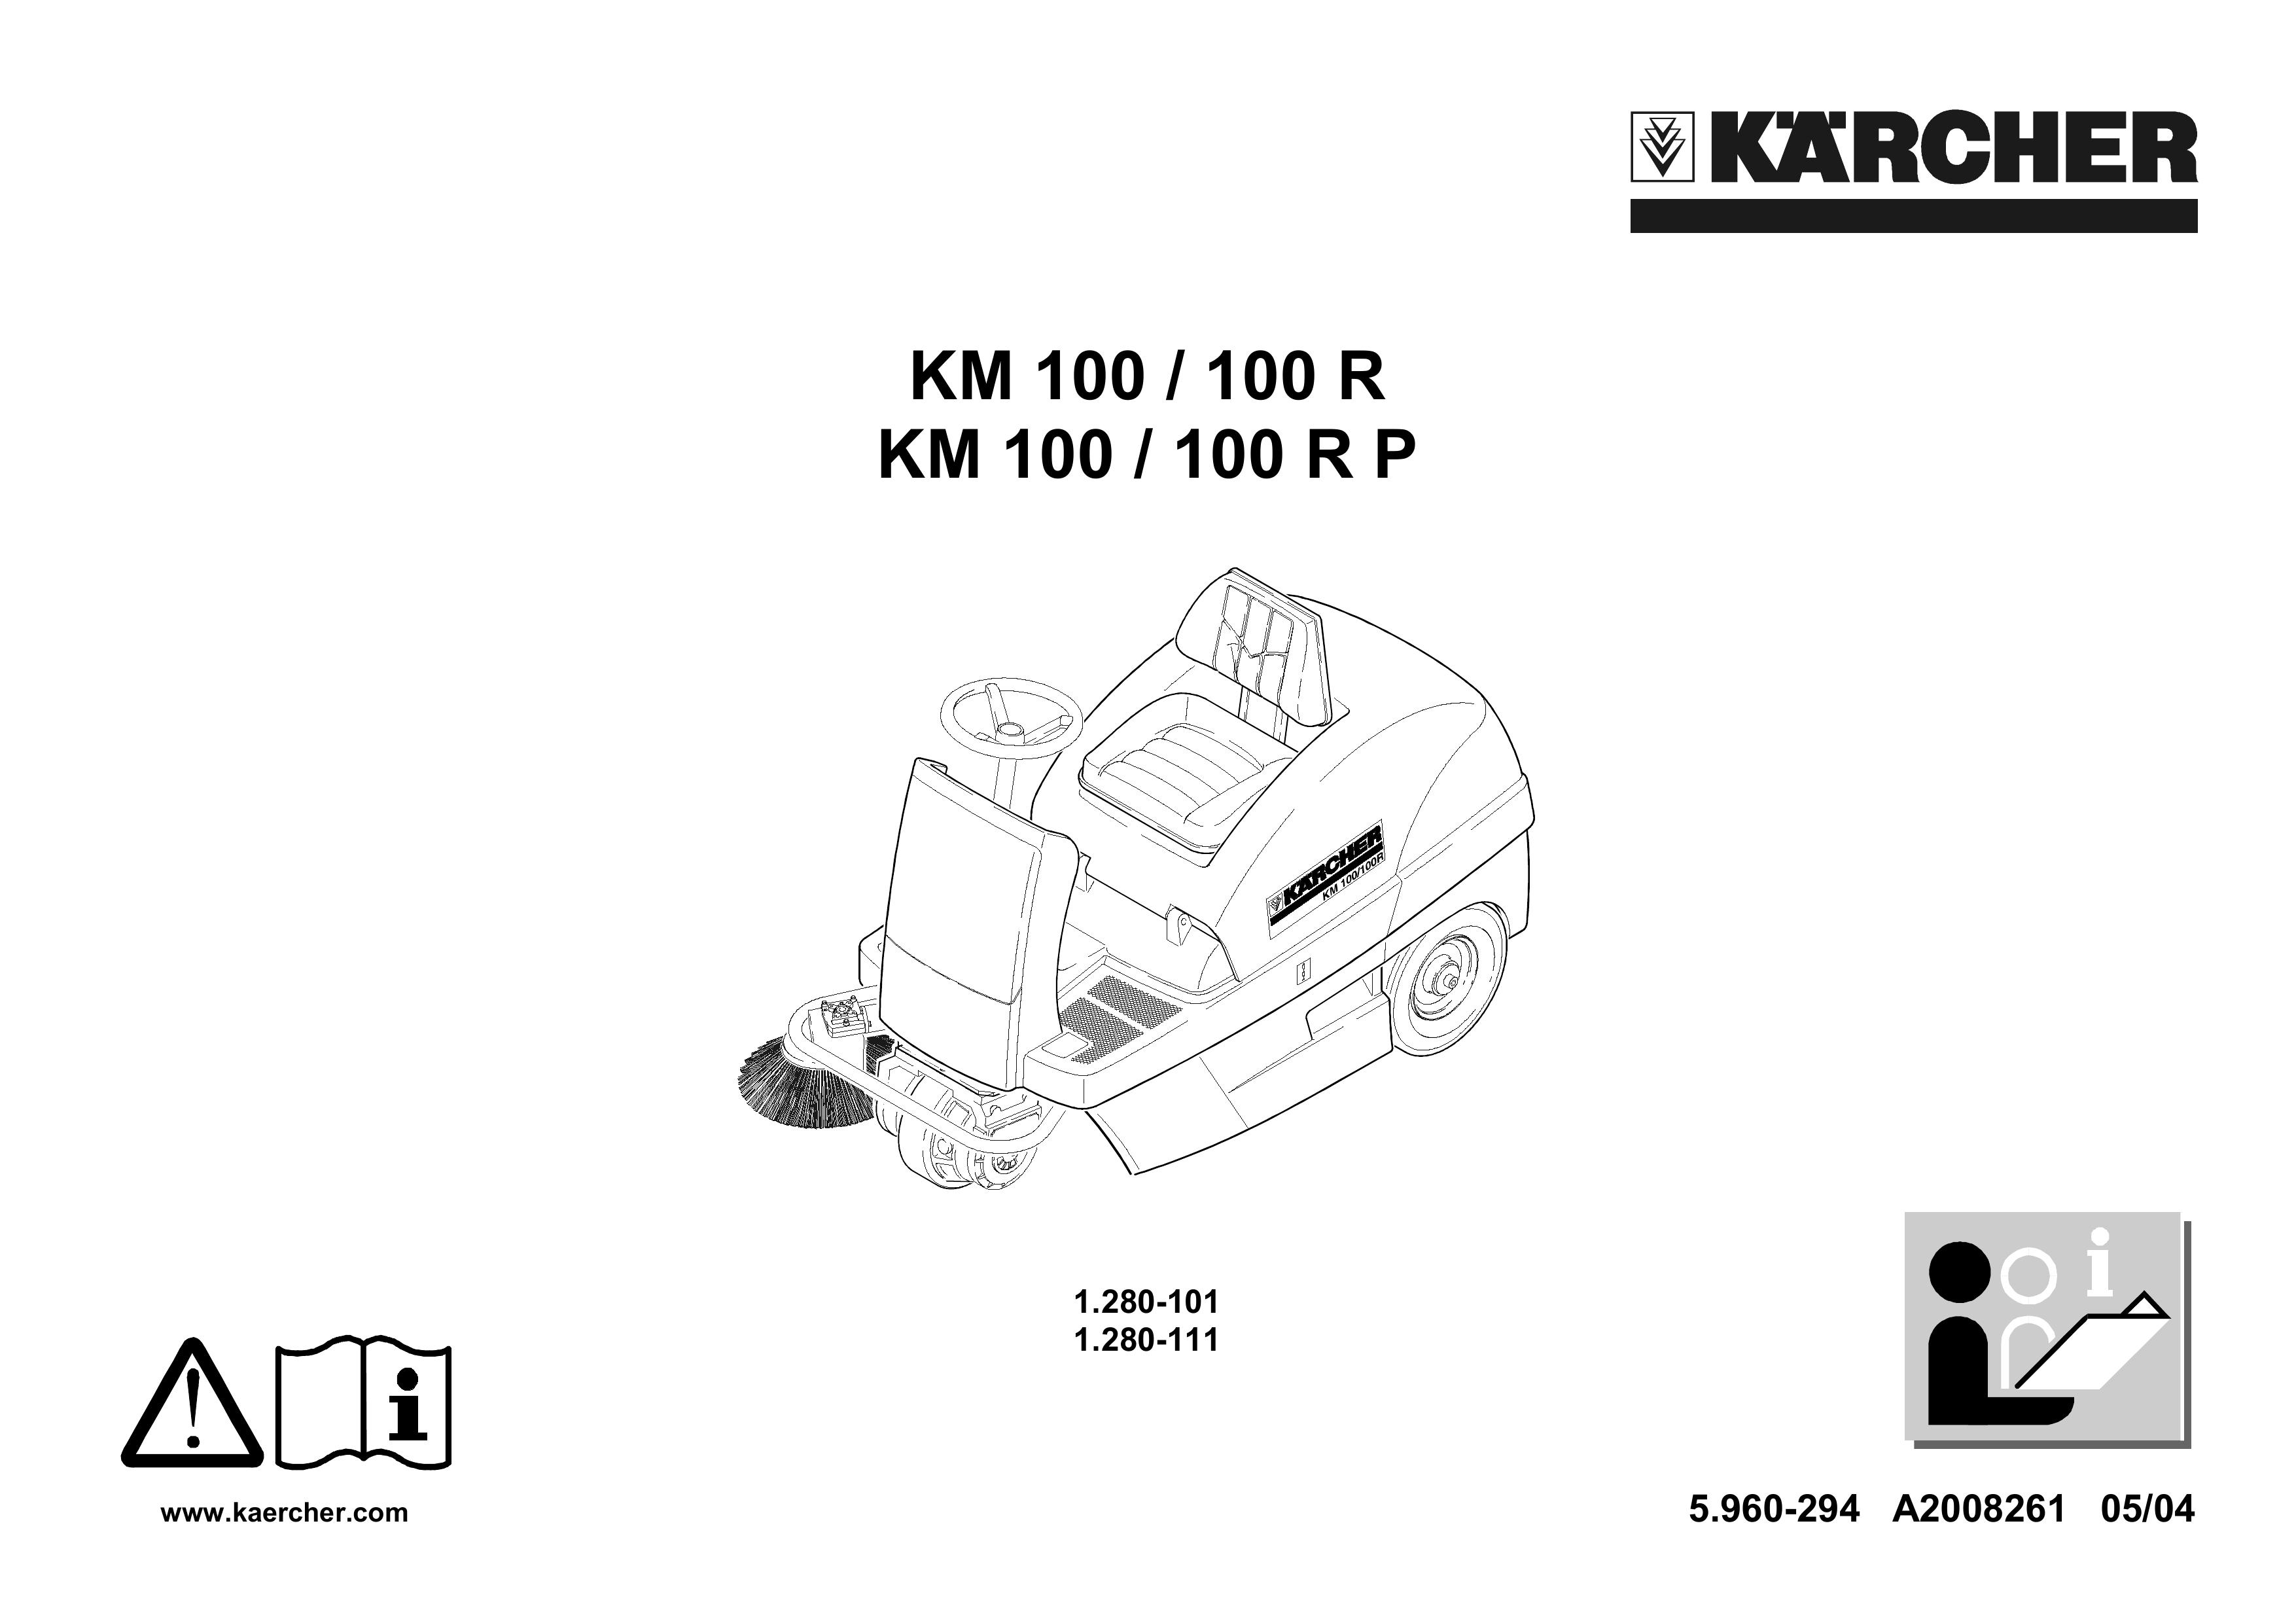 Karcher KM 100 / 100 R Lawn Sweeper User Manual